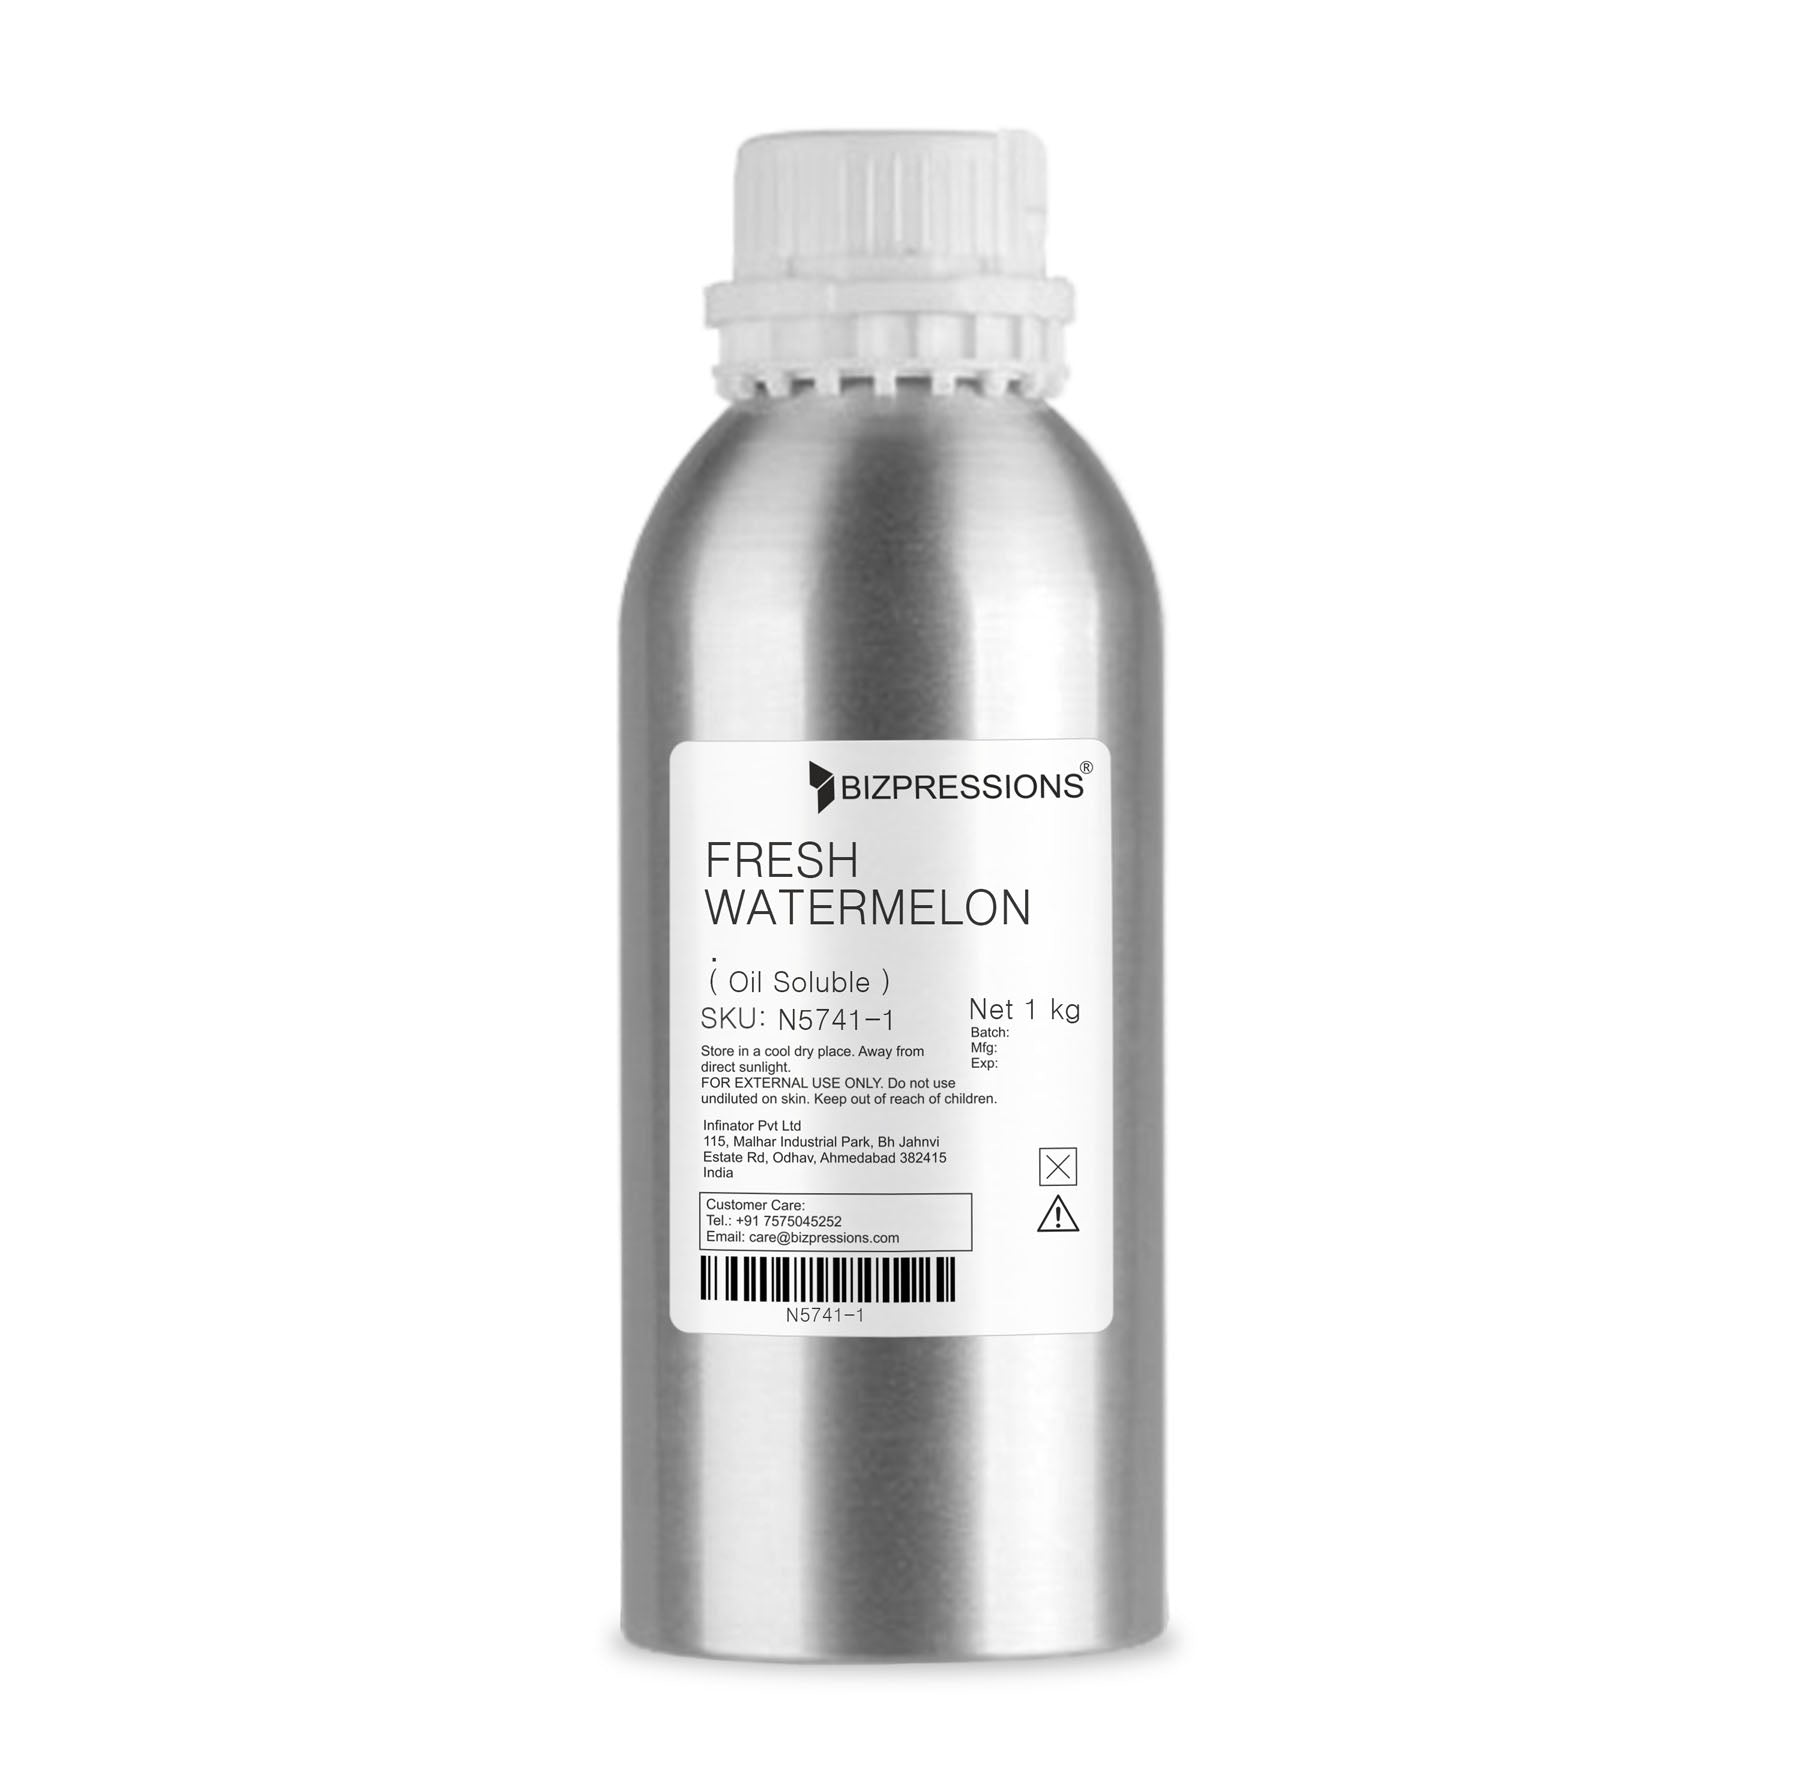 FRESH WATERMELON - Fragrance ( Oil Soluble ) - 1 kg